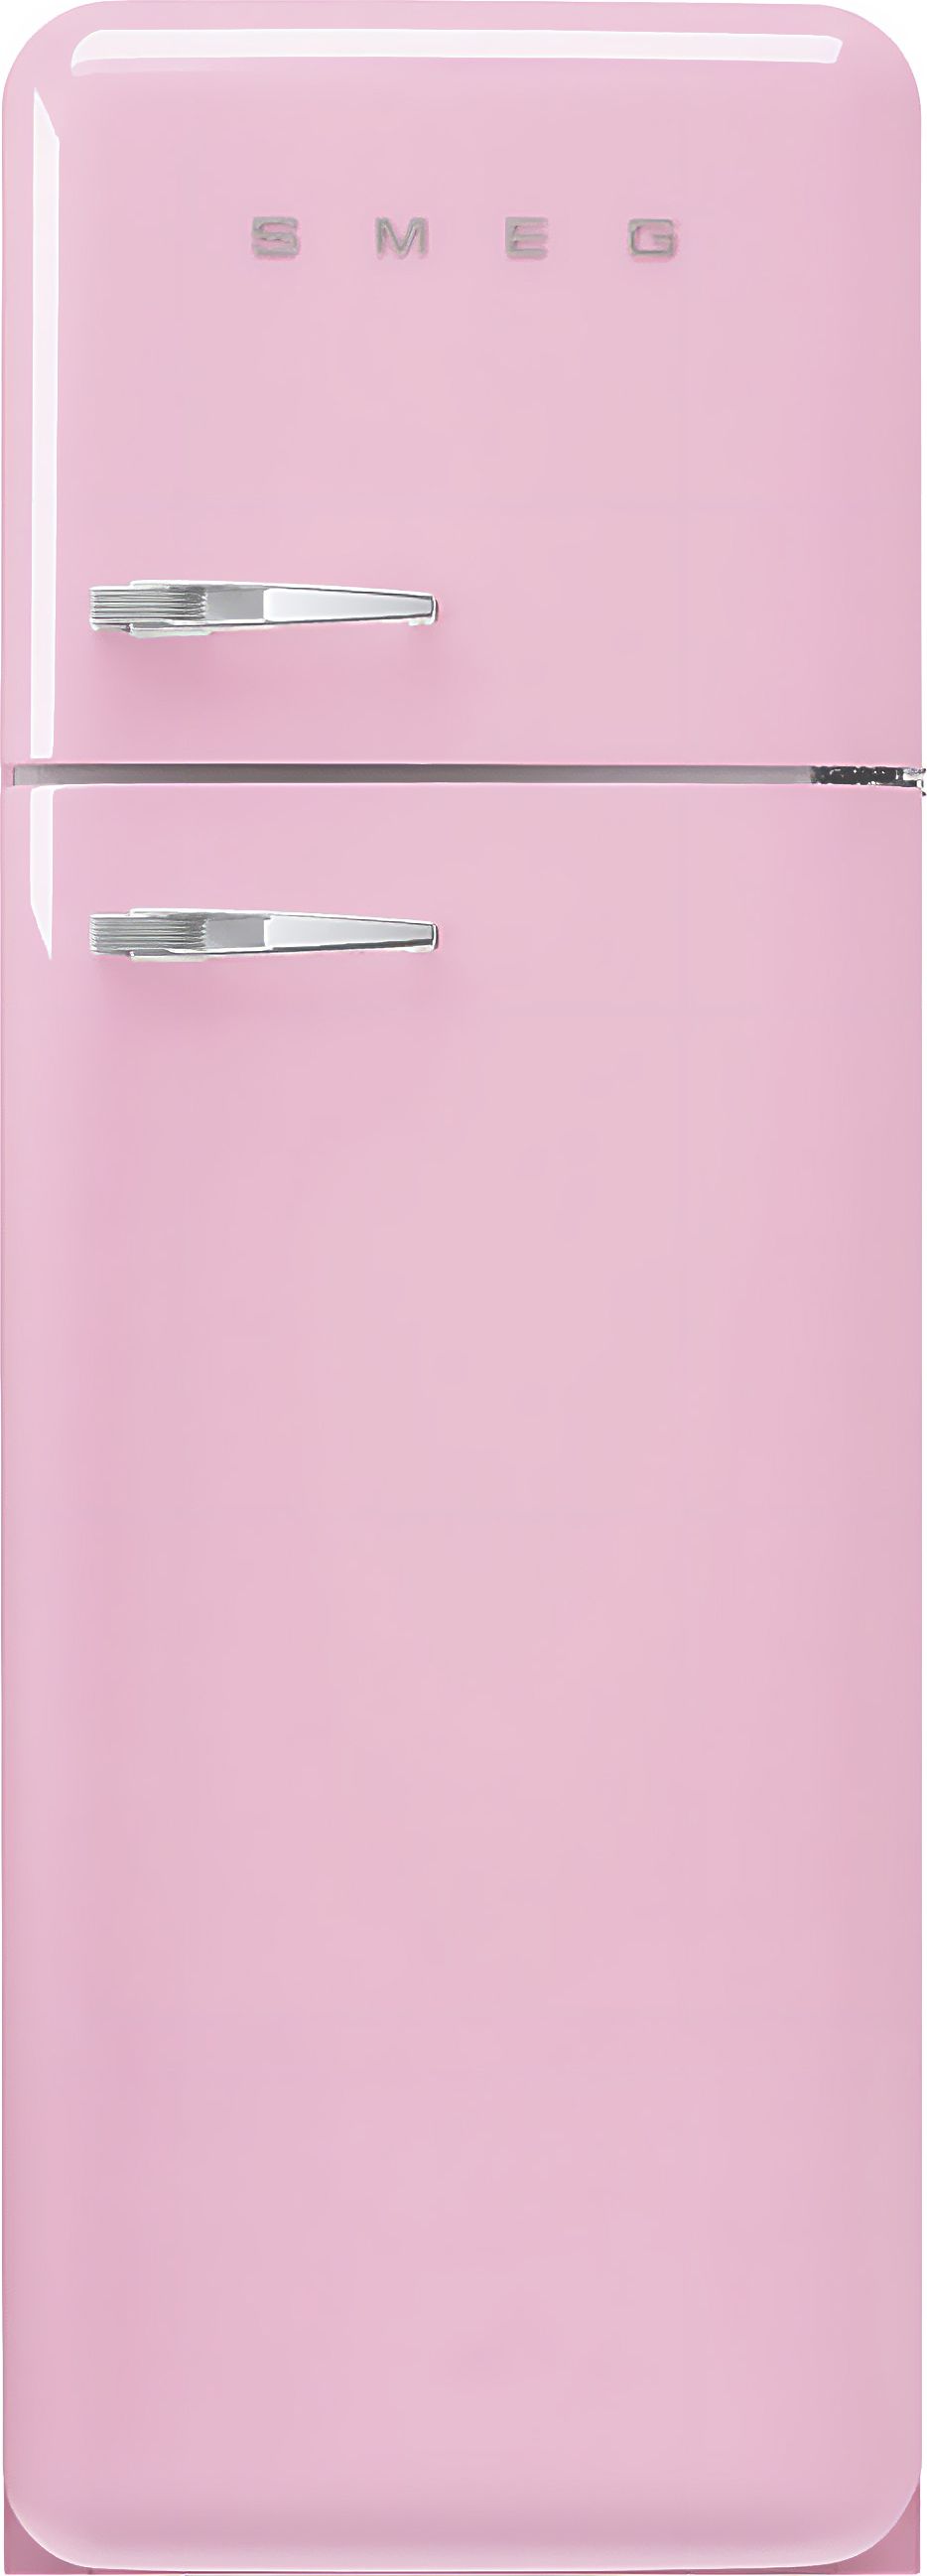 Smeg Right Hand Hinge FAB30RPK5UK 70/30 Fridge Freezer - Pastel Pink - D Rated, Pink